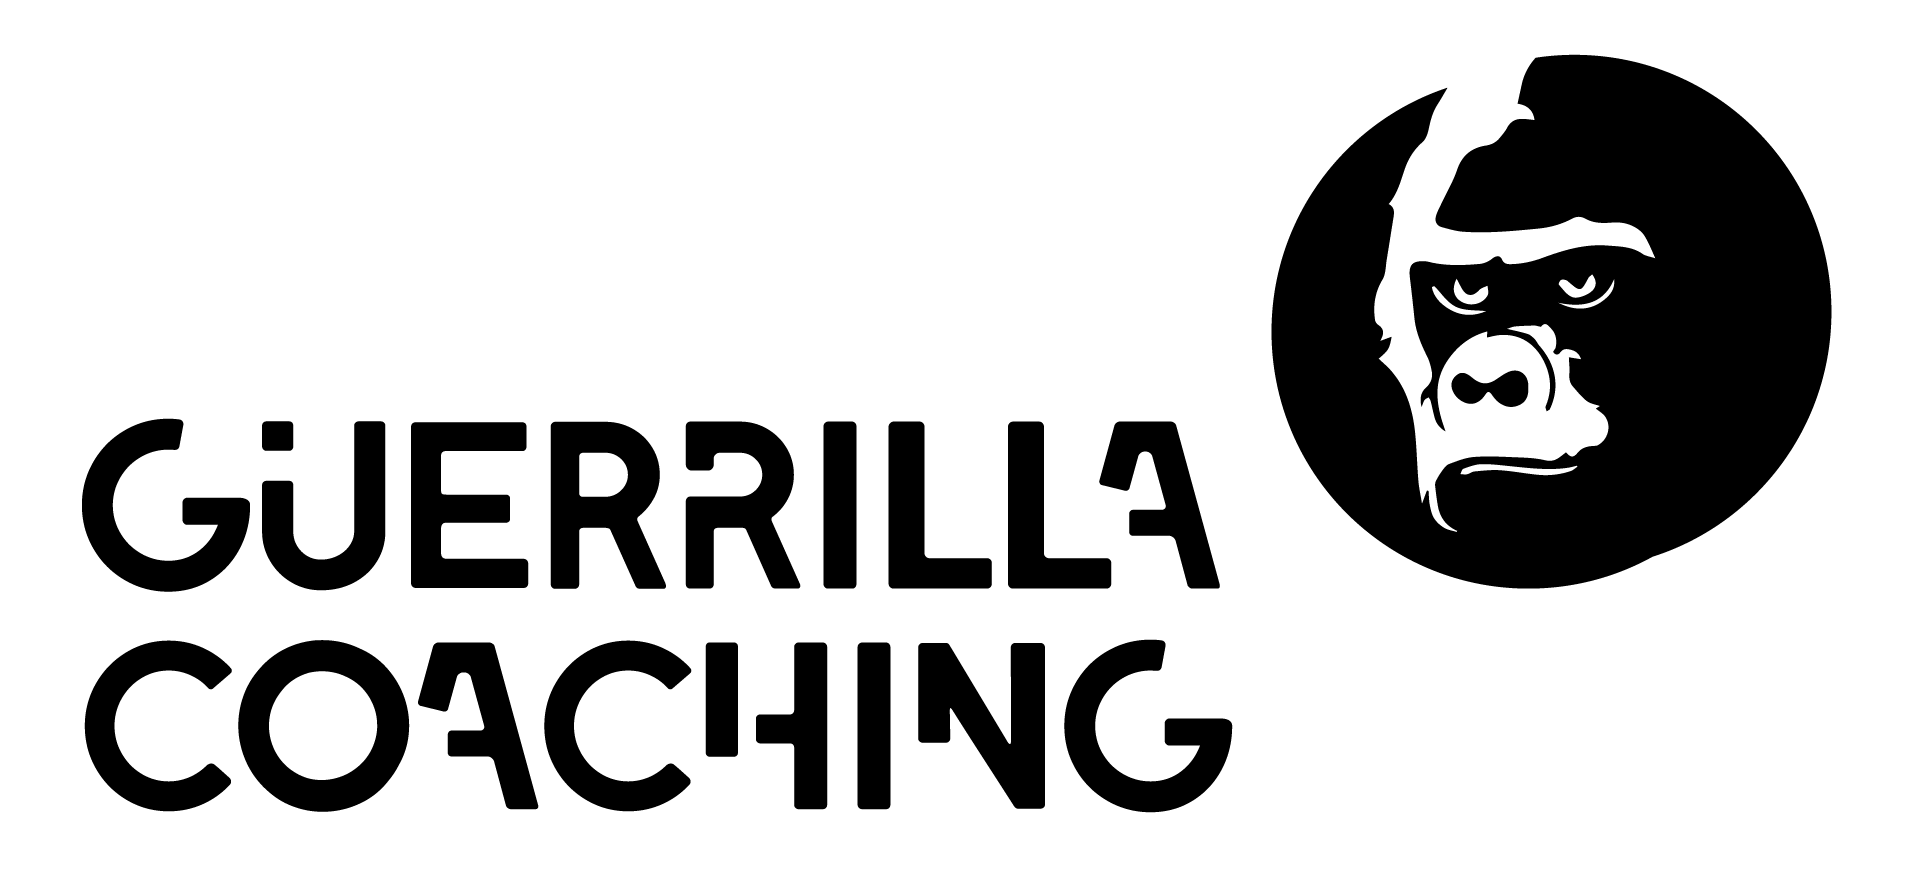 guerrilla coaching logo black version